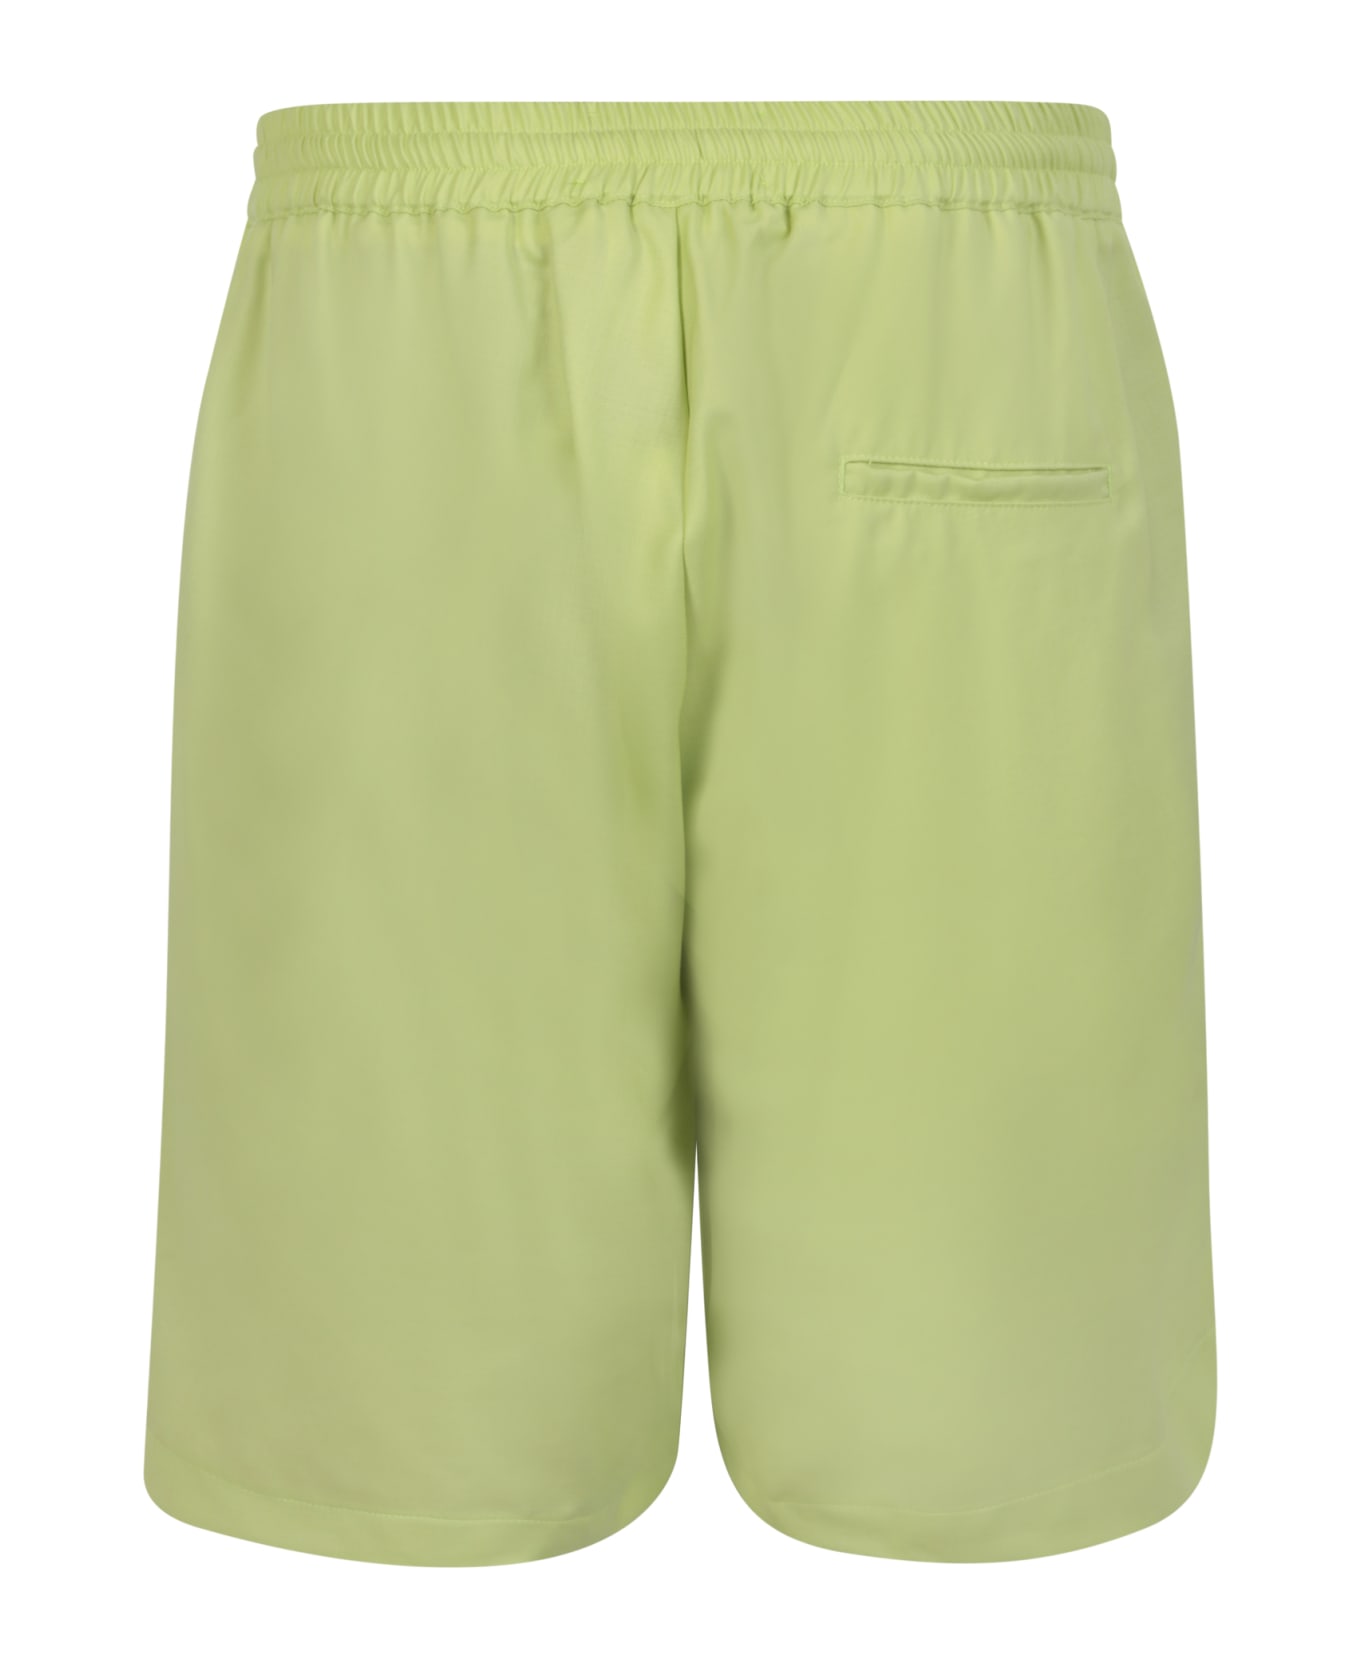 Bonsai Lime Green Shorts - Green